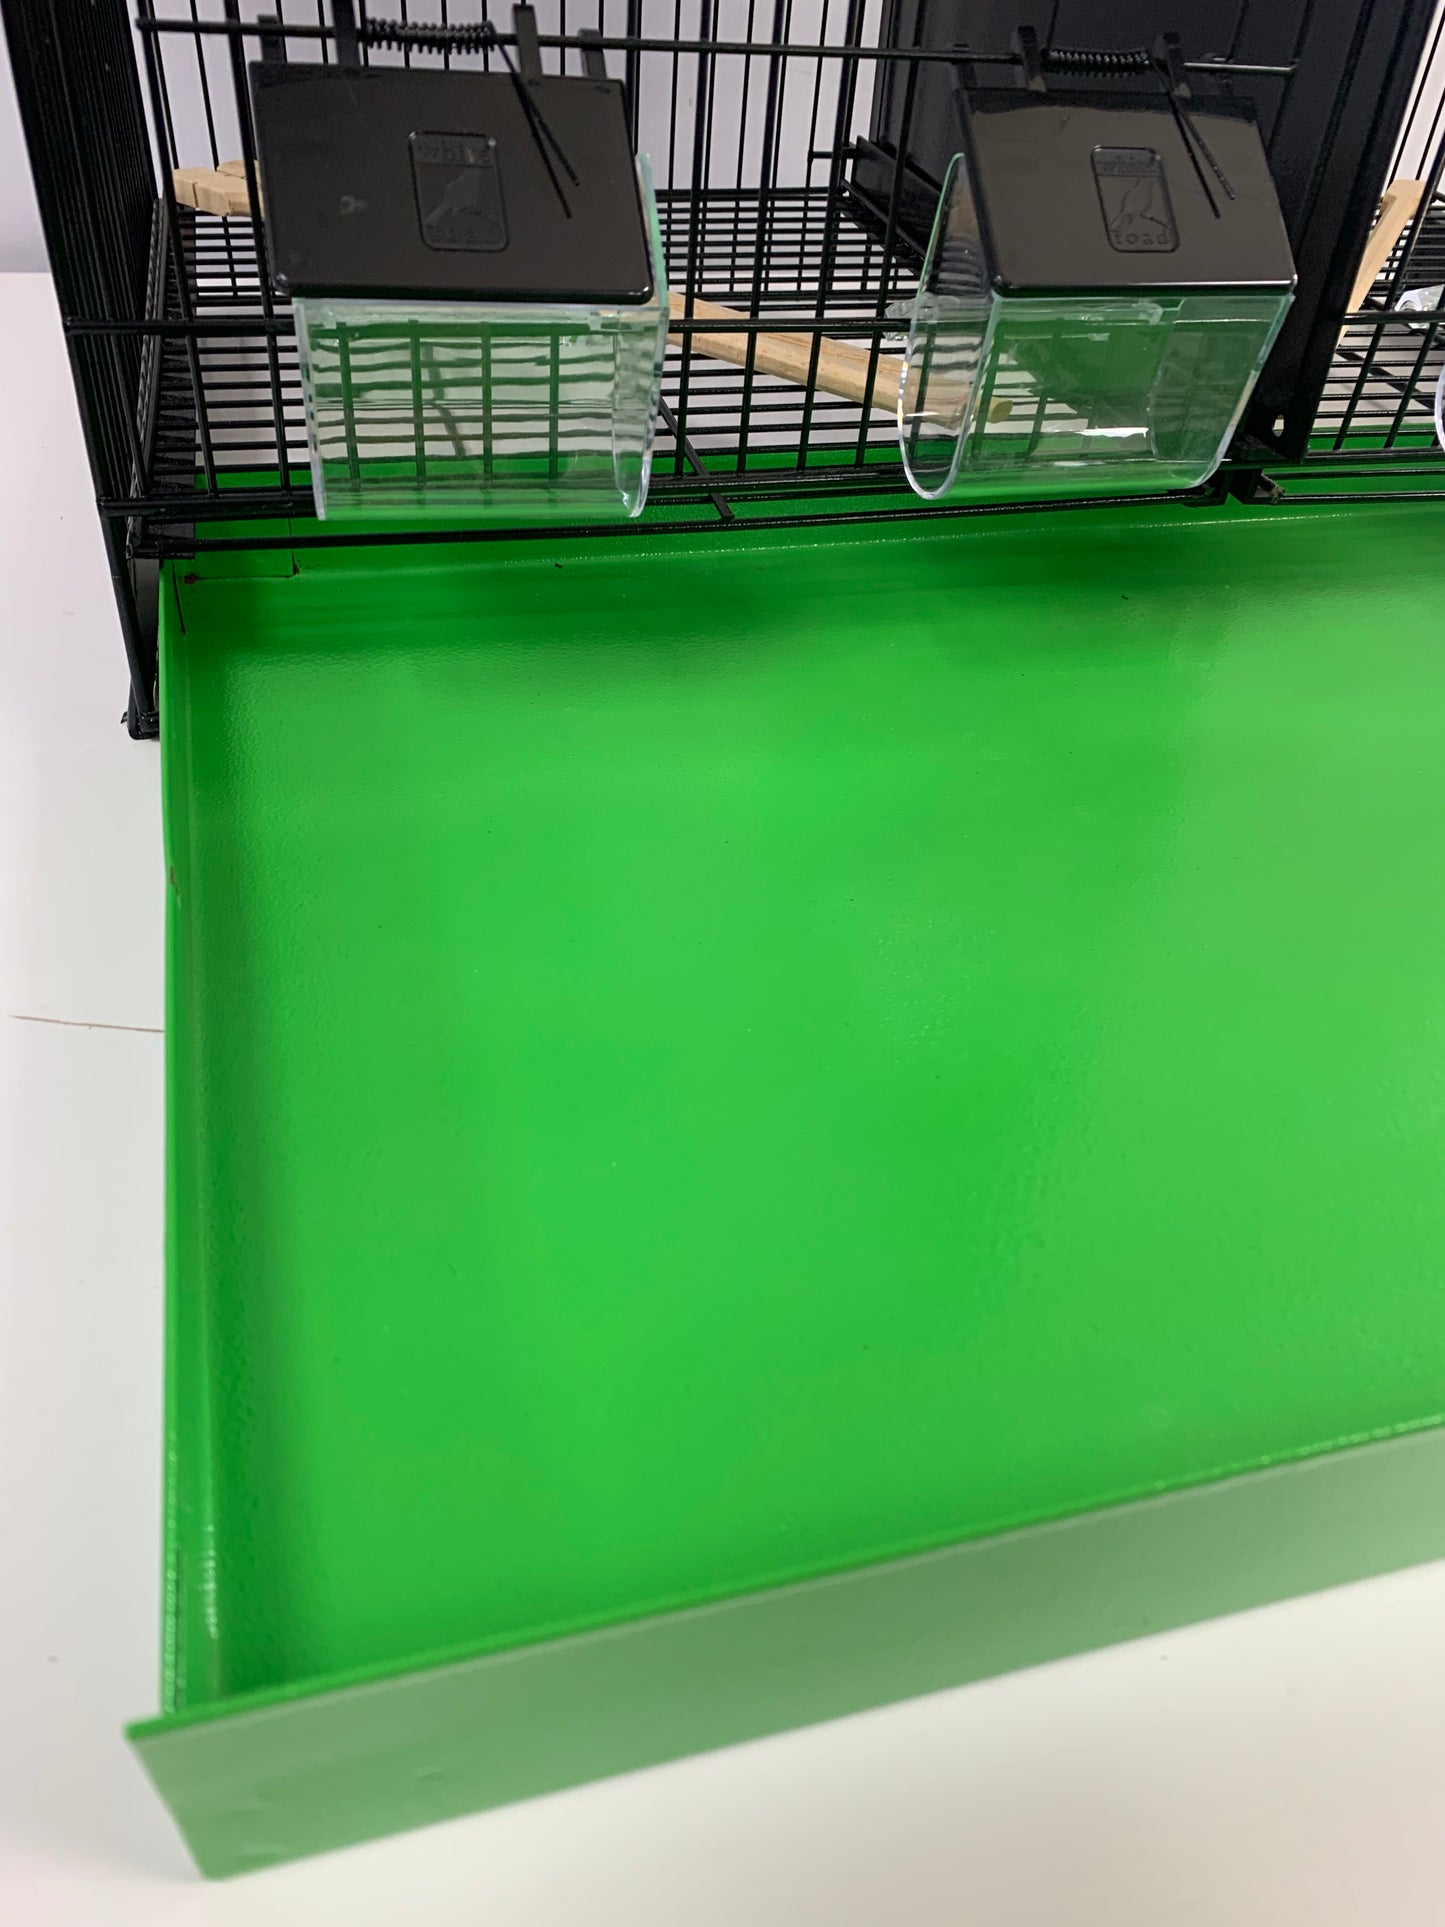 60cm Black Metal Double Breeder Bird Cage with Green Metal Bottom Tray. Size 61cm x 35cm x 42cm.